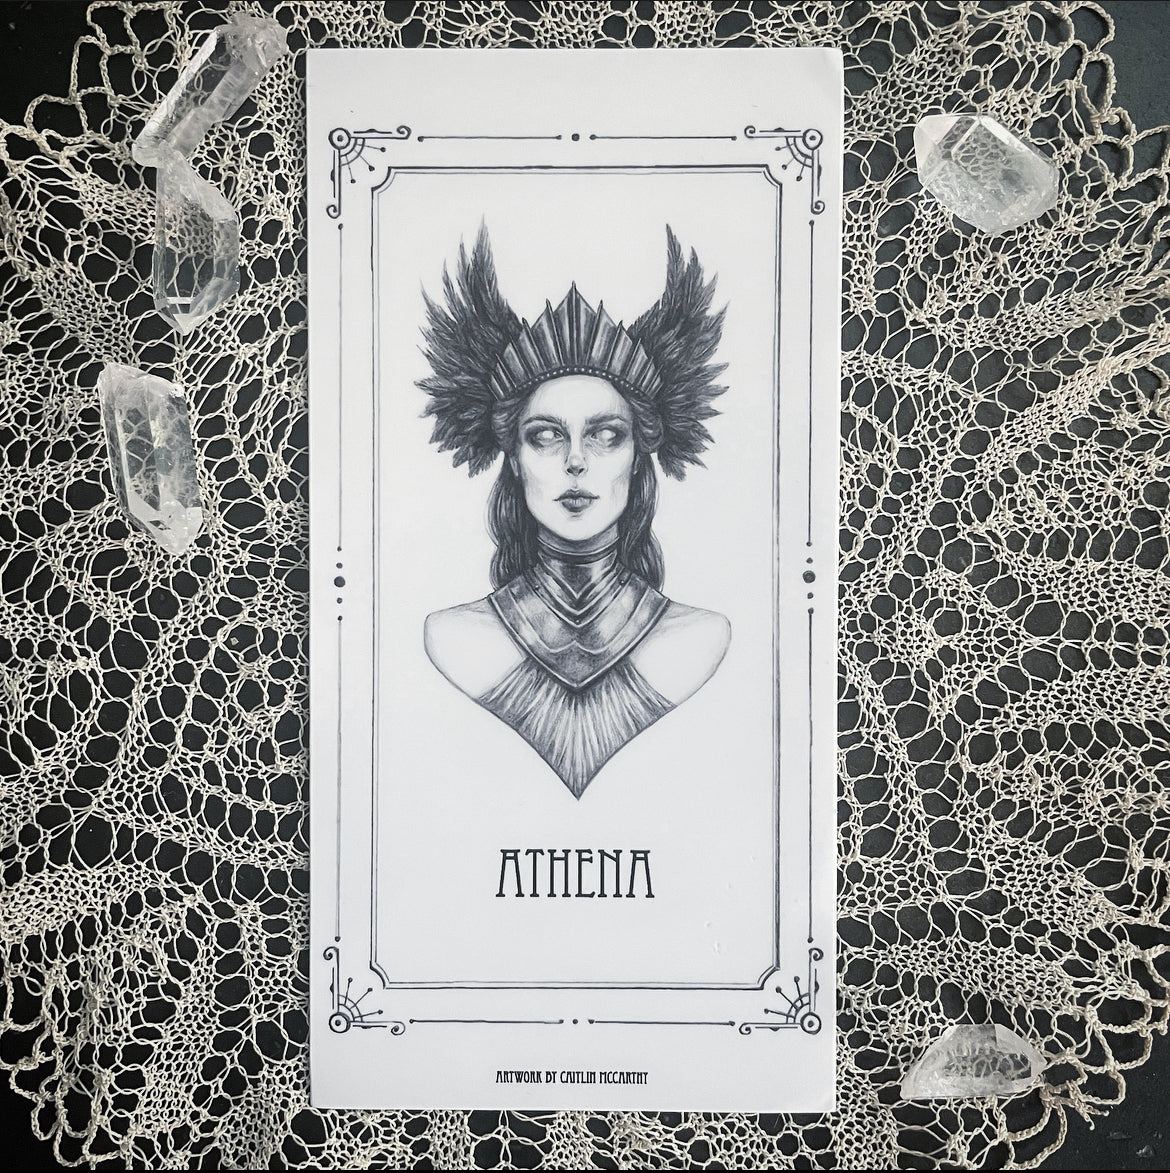 Athena Devotional Candle Sticker - 3x6” High Quality Vinyl Sticker